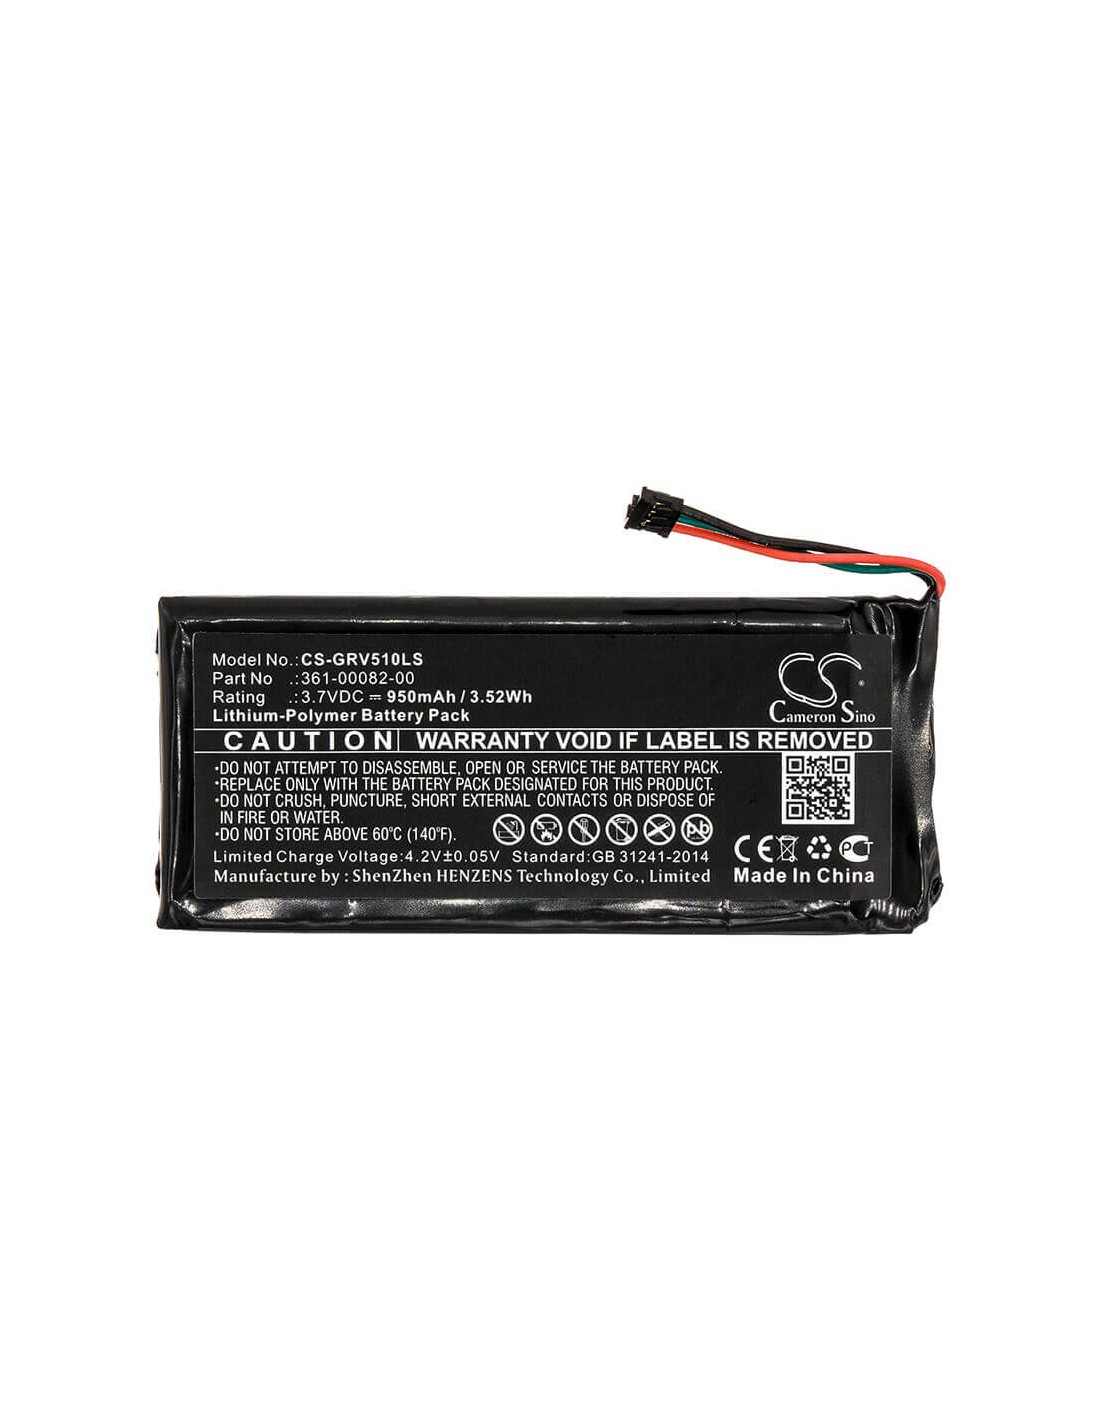 Battery for Garmin, 010-01951-00, Rtl510, Varia Rtl501 3.7V, 950mAh - 3.52Wh